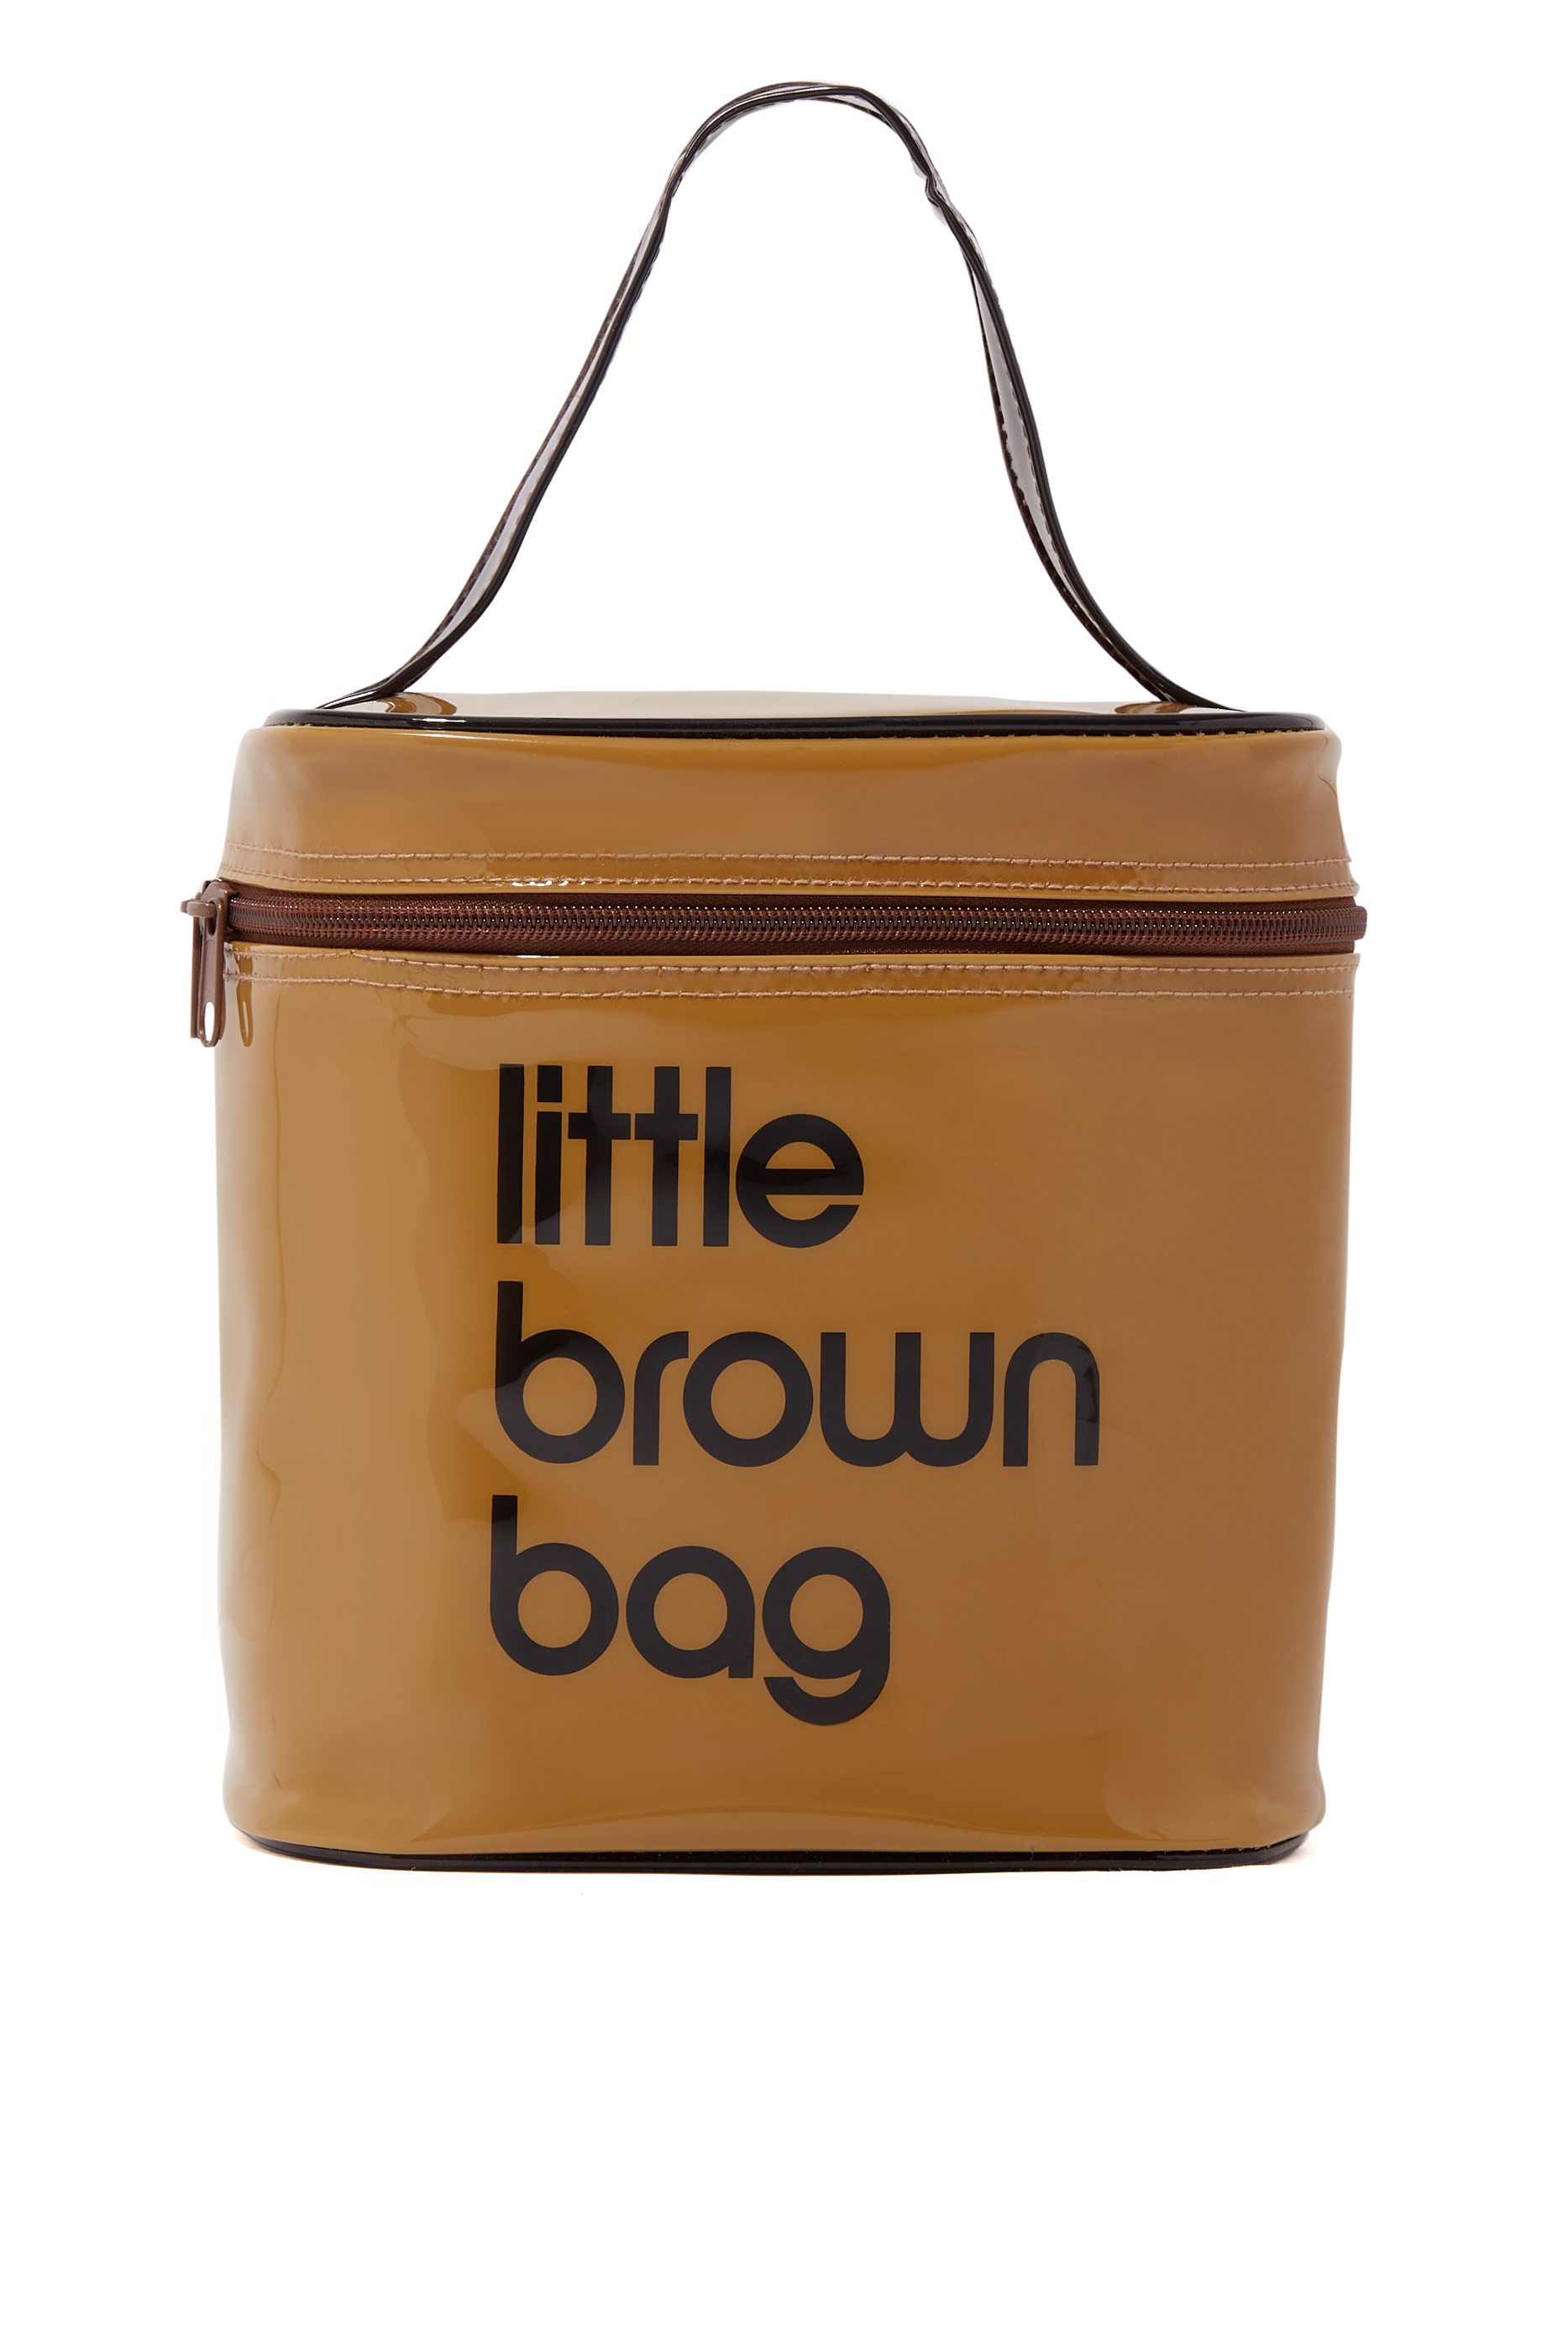 BLOOMINGDALES SMALL LITTLE Brown Bag Paper Carrier 8